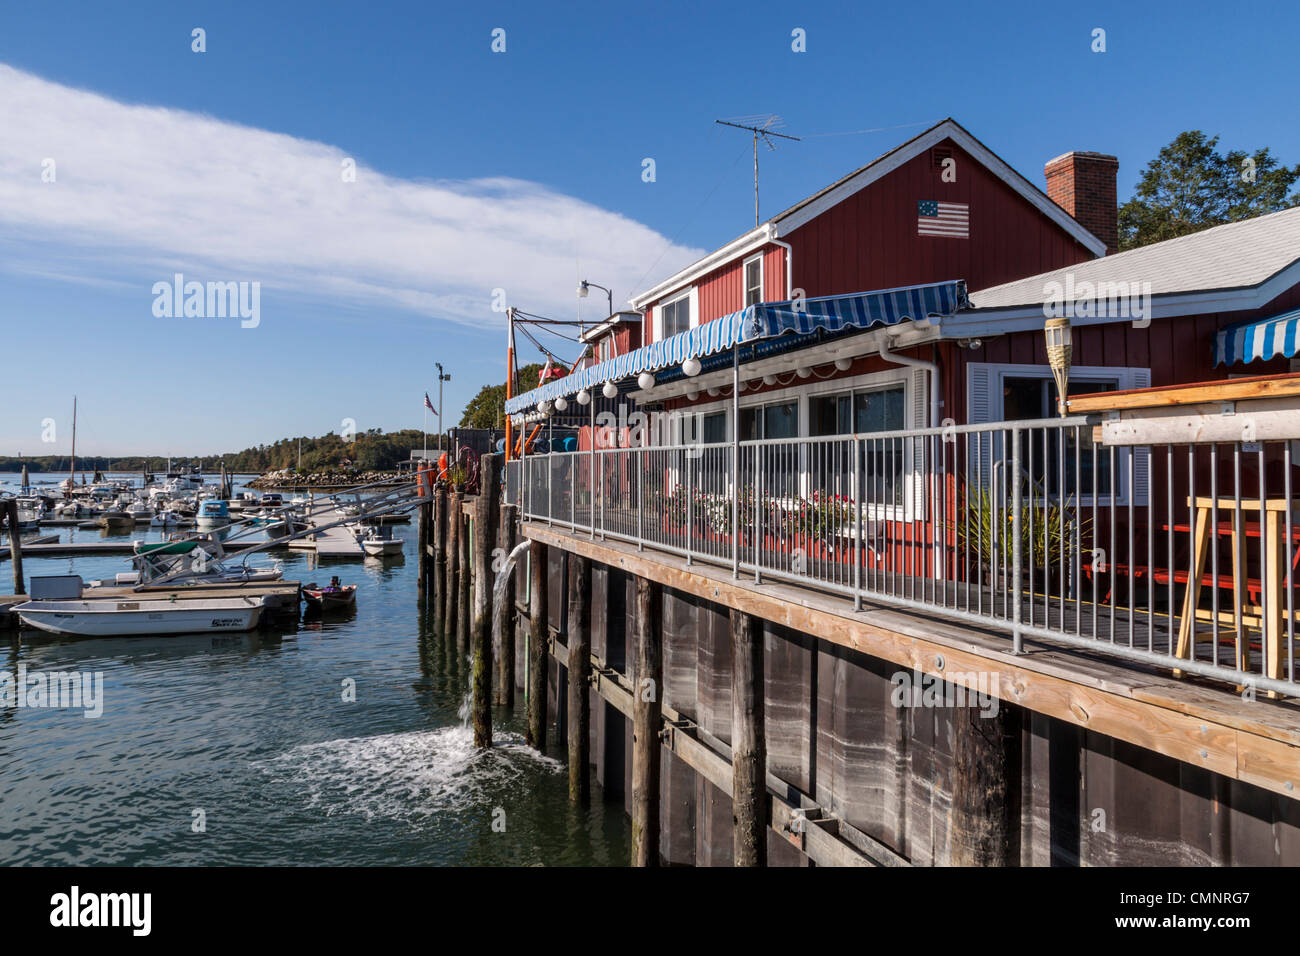 Freeport Town Wharf area at South Freeport harbor, South Freeport, Maine. Stock Photo